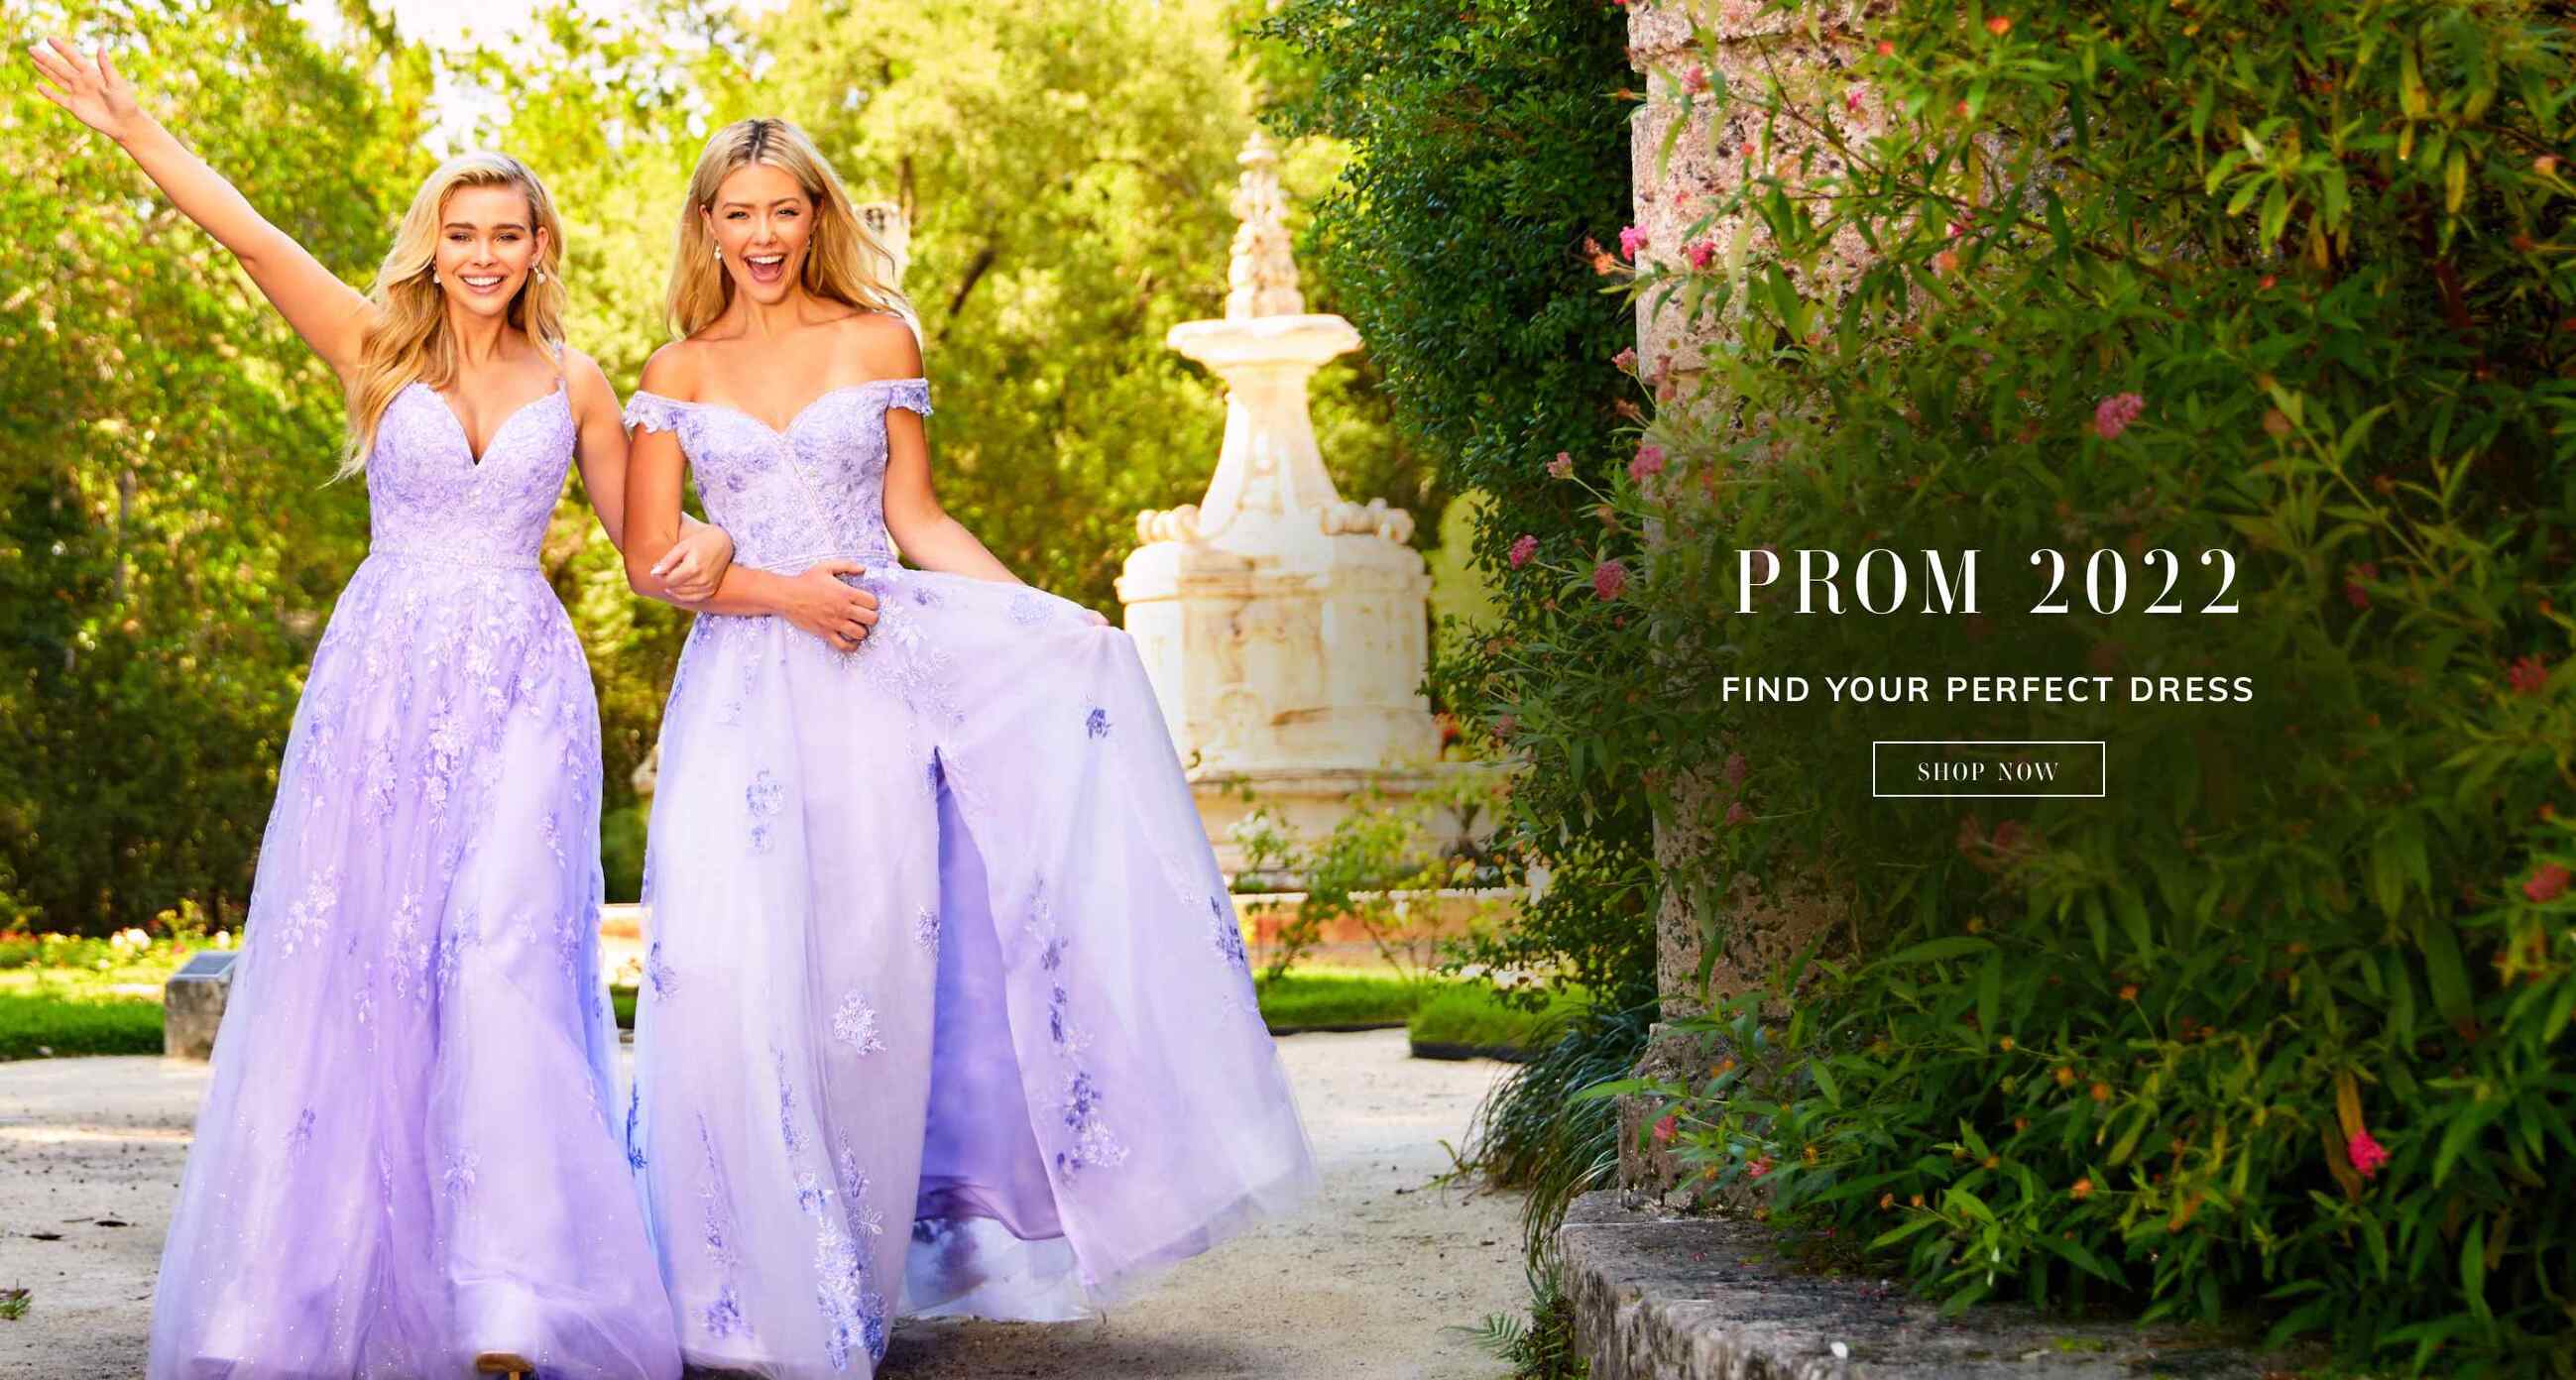 Find your spring 2022 prom dress at Mimi's Bridal. Desktop image.